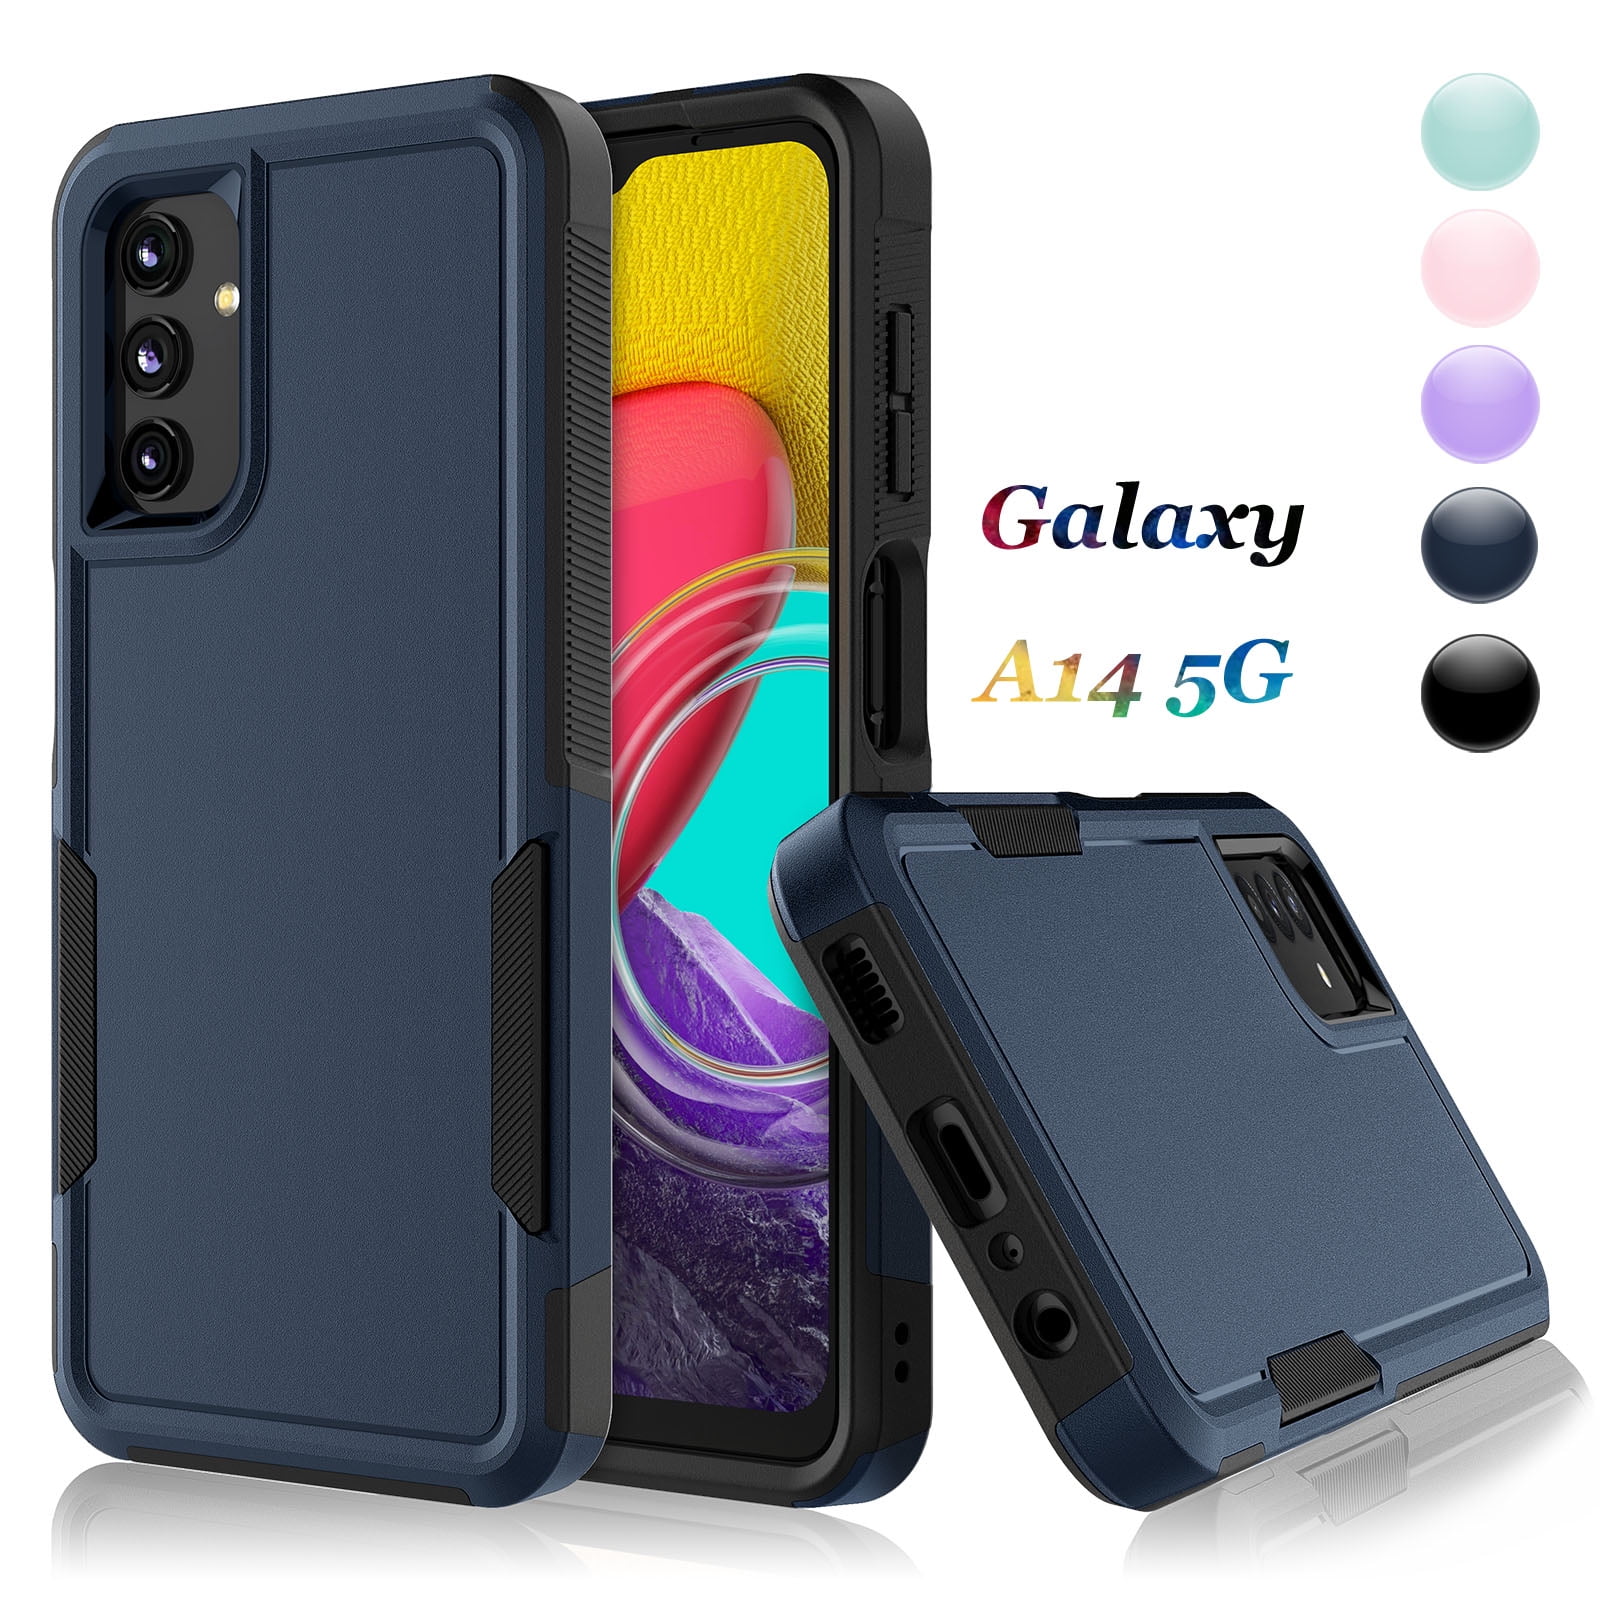 Galaxy A14 5G Card Slot Case, Black Mobile Accessories - EF-OA146TBEGUS